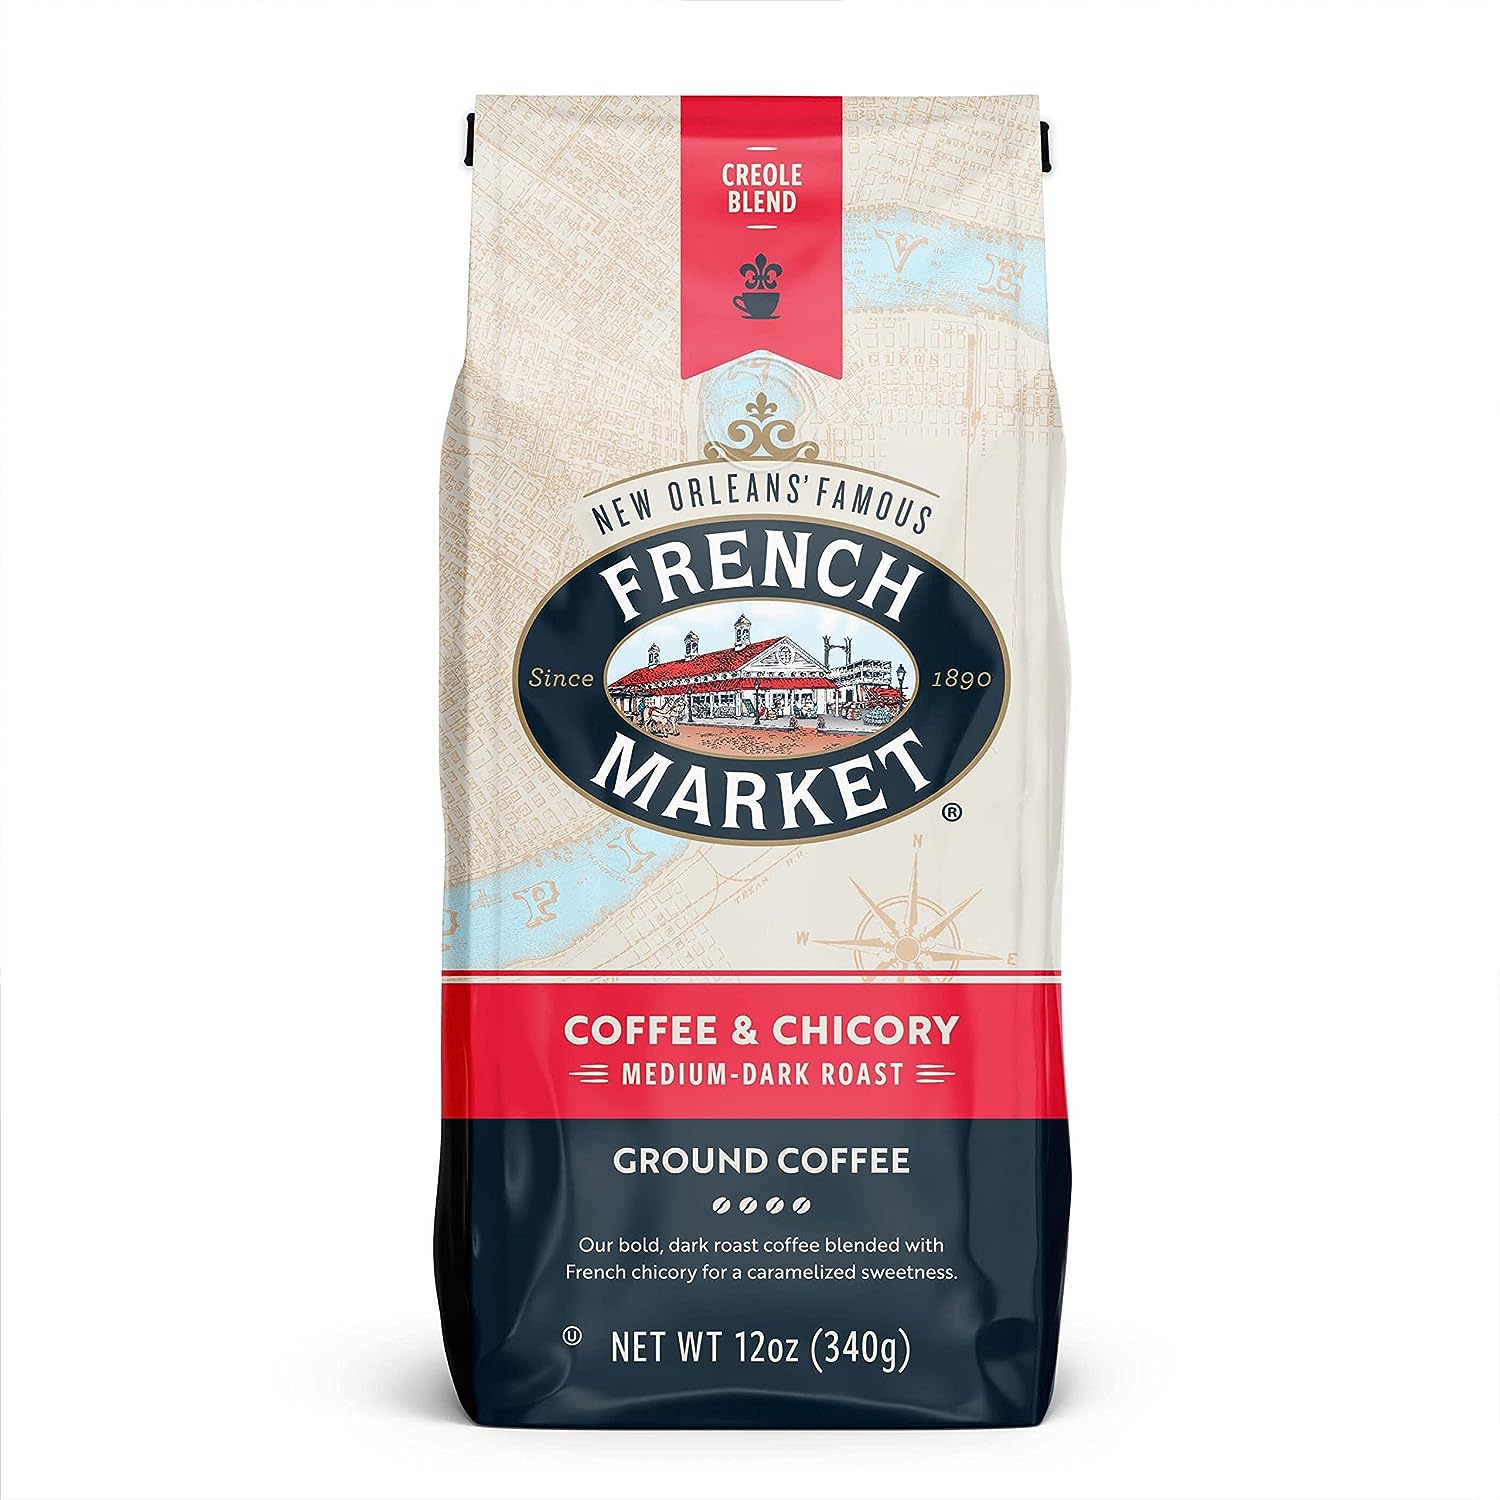 French Market Coffee, Creole Blend Coffee and Chicory, Dark Roast Ground Coffee Bag